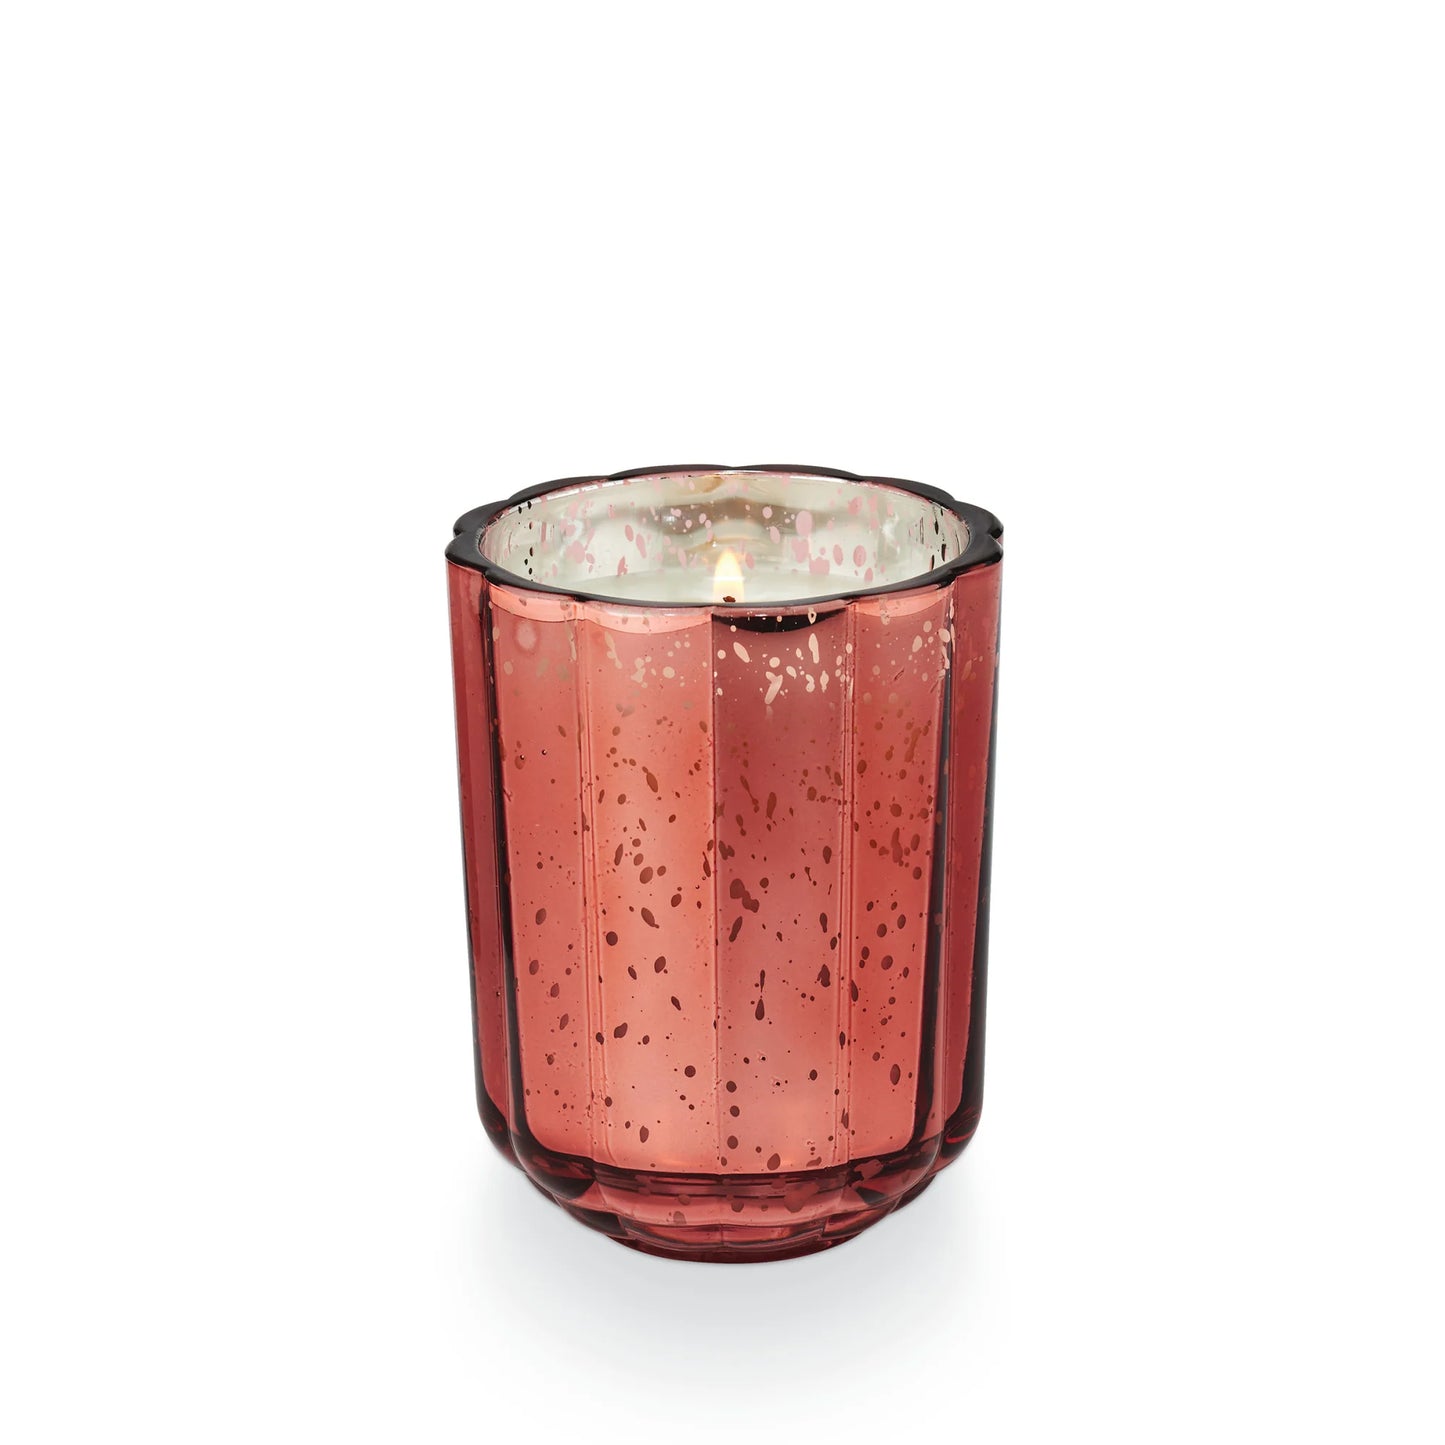 Pink Pepper Fruit Flourish Glass Candle